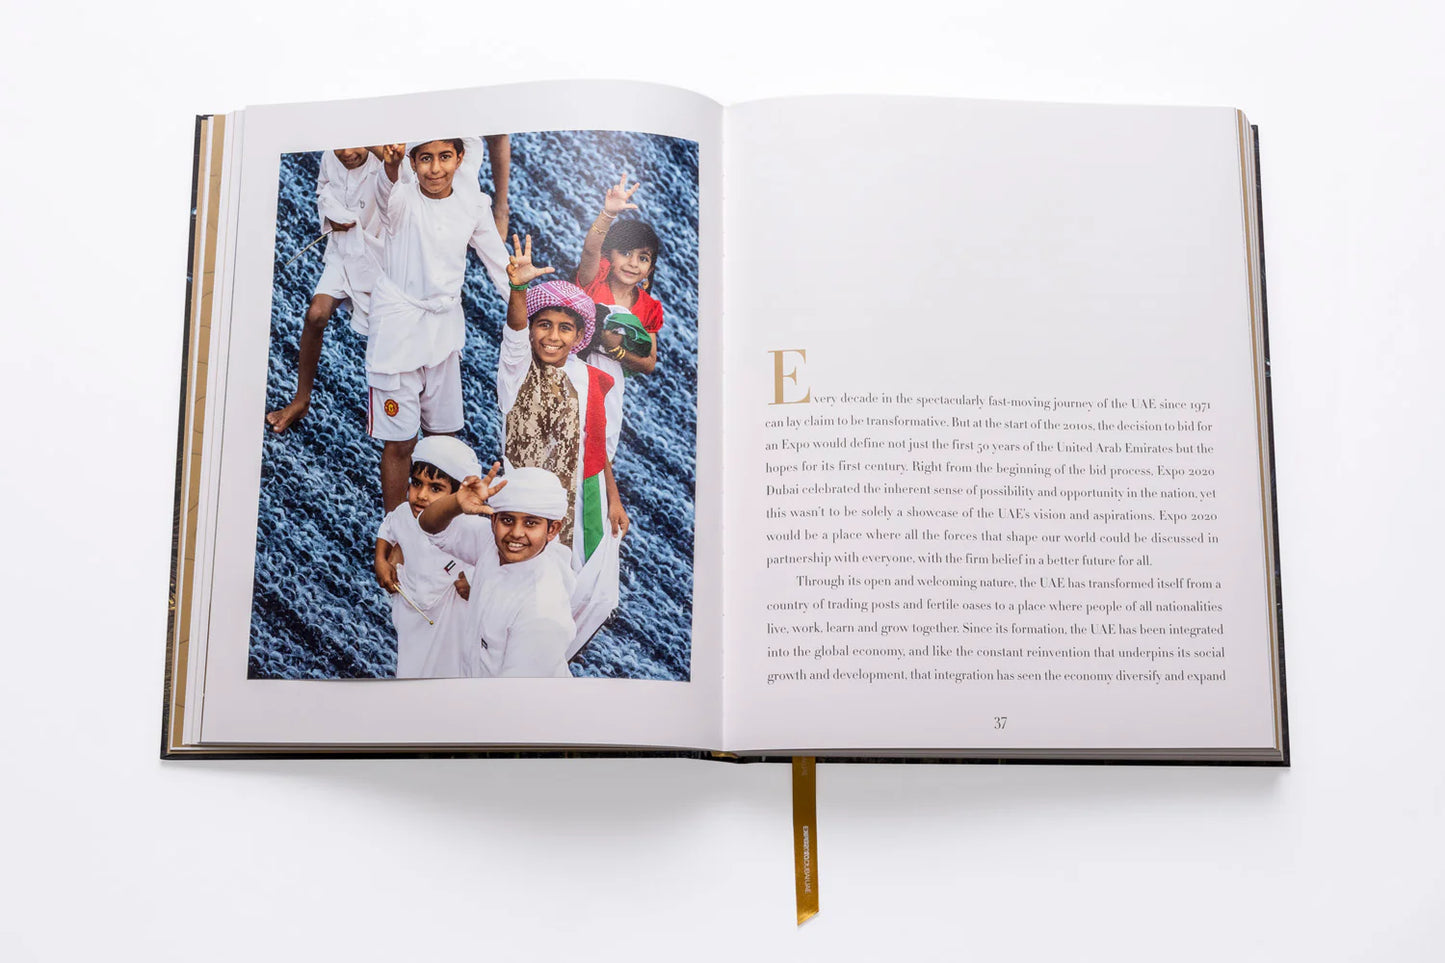 Book Expo 2020 Dubai The Definitive Edition: Impossible Collection